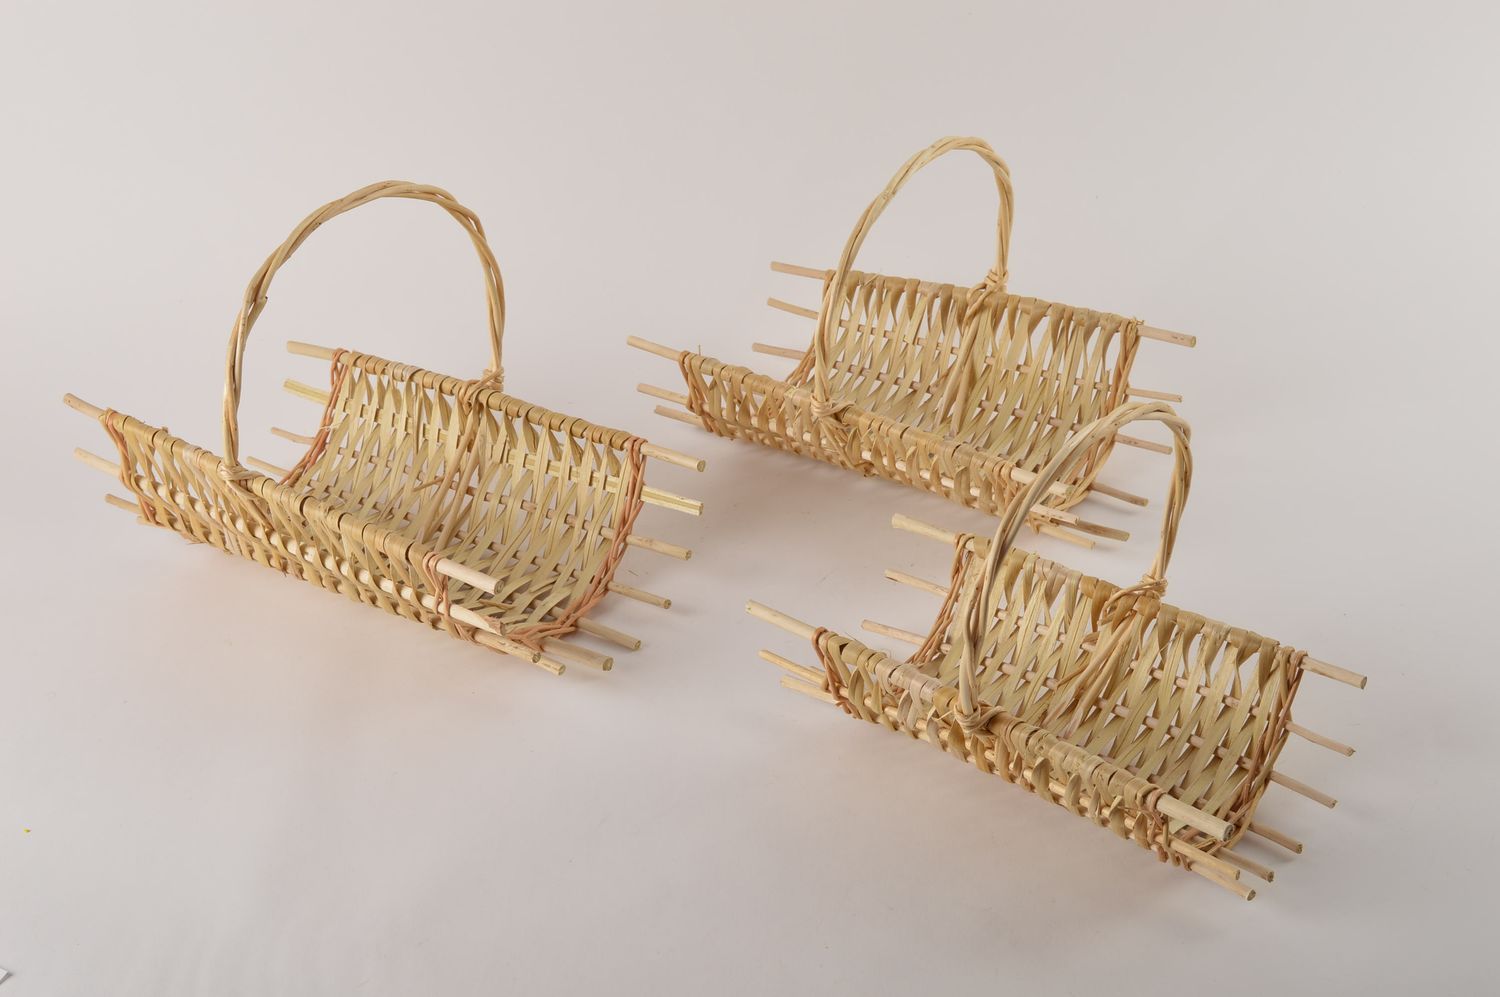 Handmade beautiful decorative baskets 3 stylish woven baskets present for women photo 3